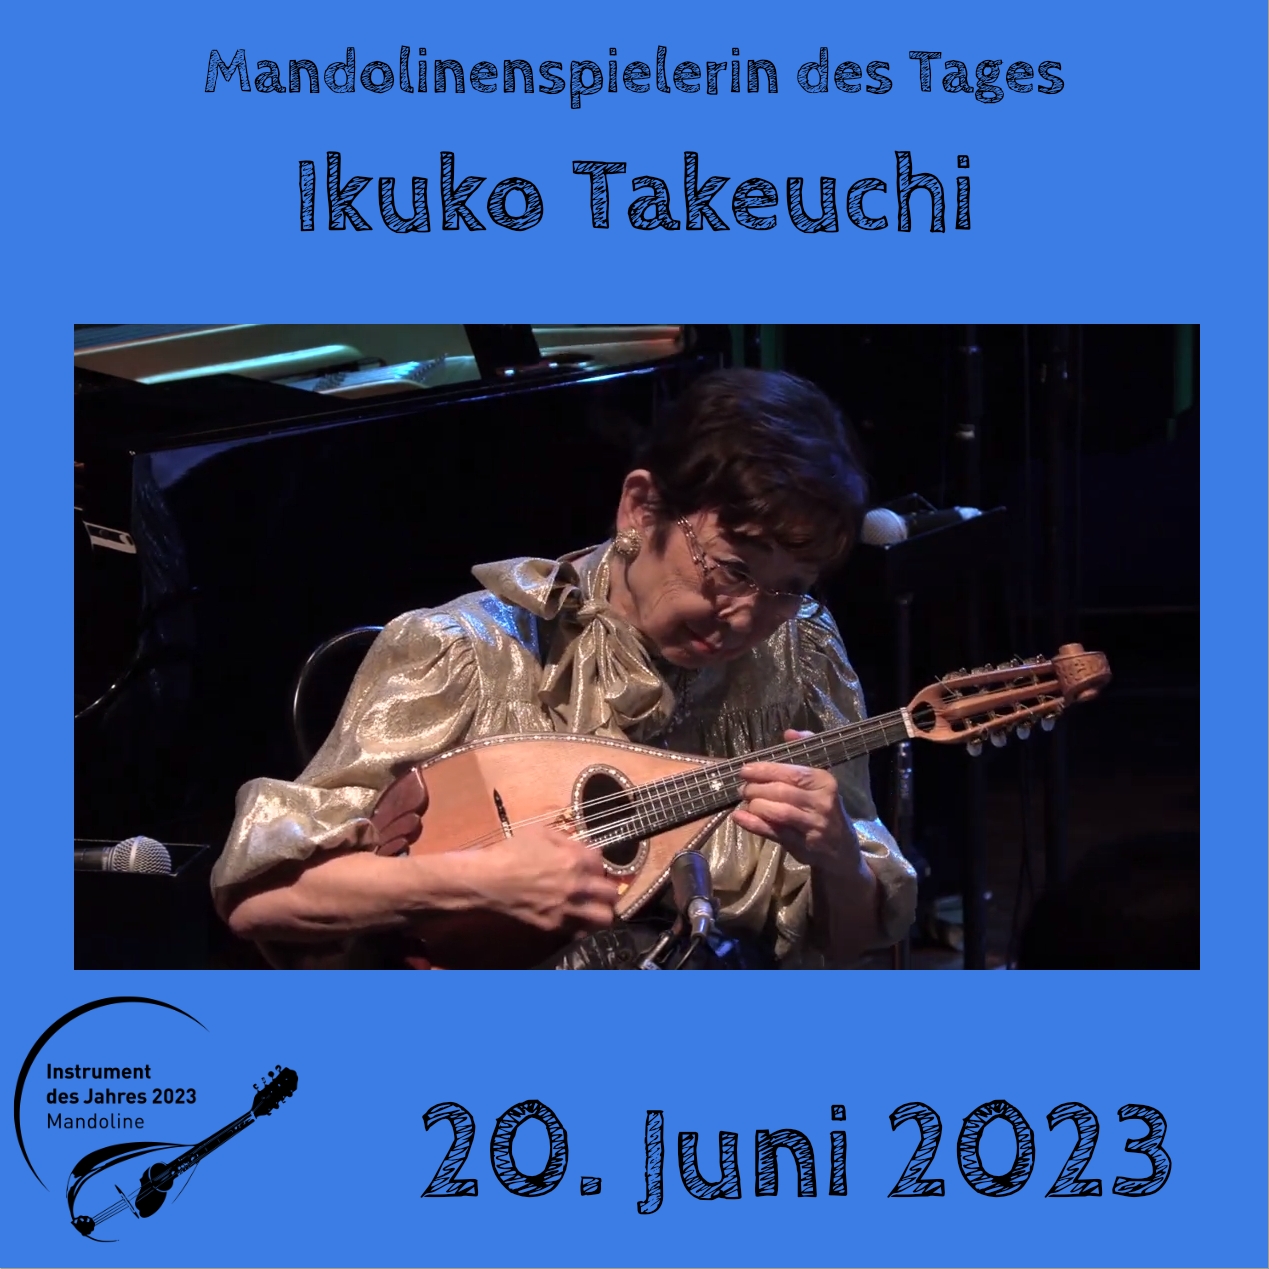 20. Juni - Ikuko Takeuchi Mandoline Instrument des Jahres 2023 Mandolinenspieler Mandolinenspielerin des Tages